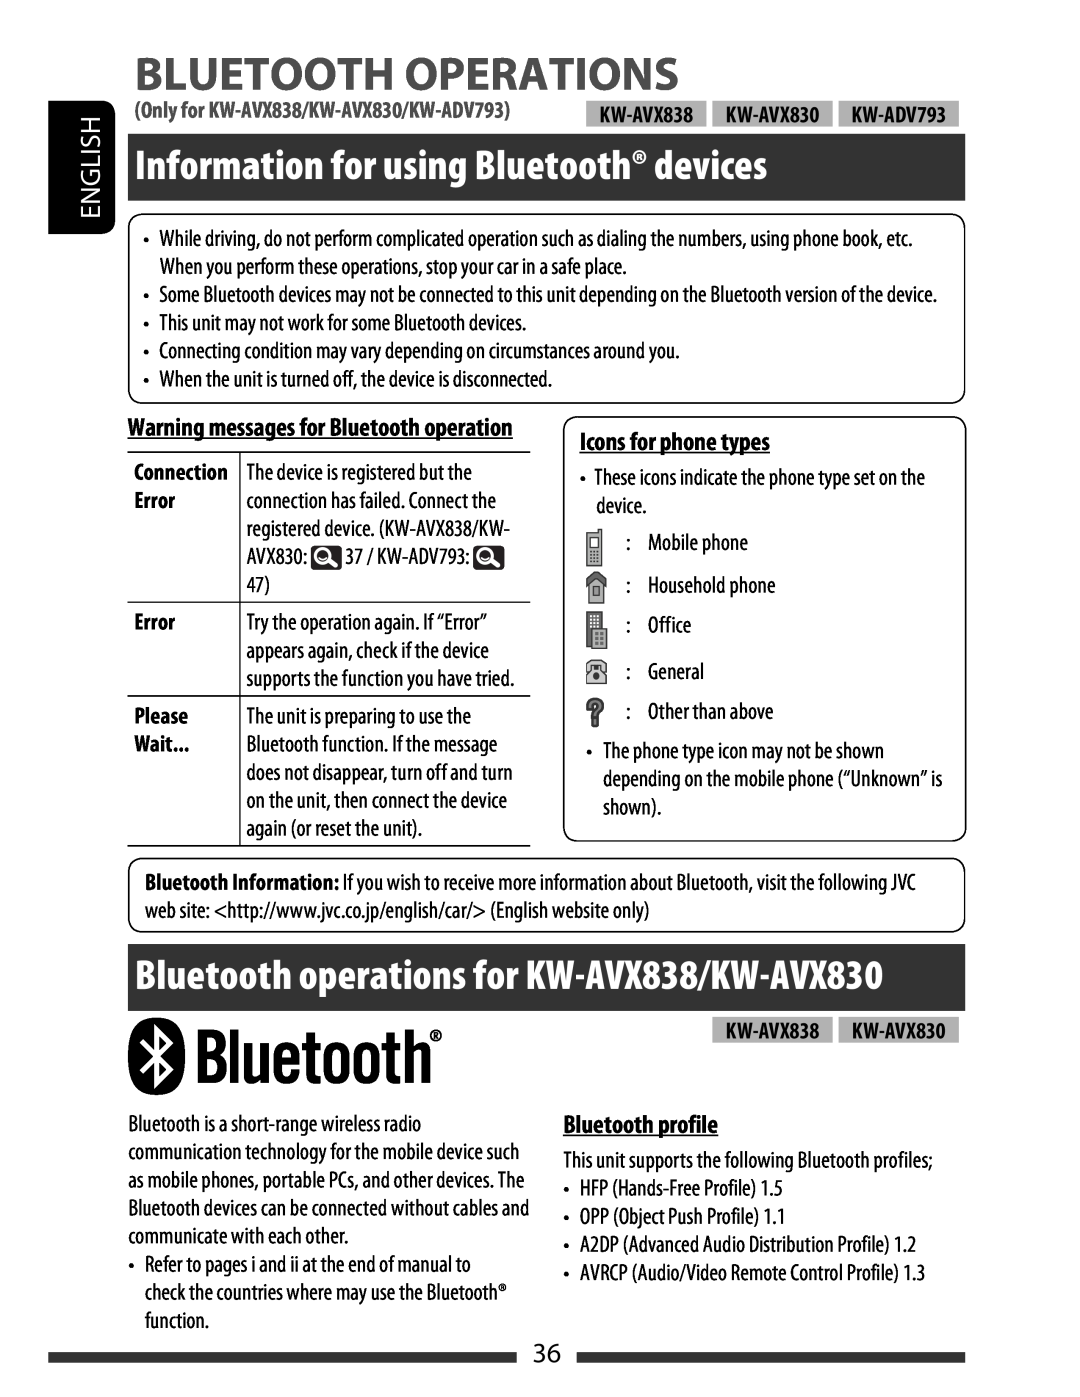 JVC manual Bluetooth Operations, Information for using Bluetooth devices, Bluetooth operations for KW-AVX838/KW-AVX830 